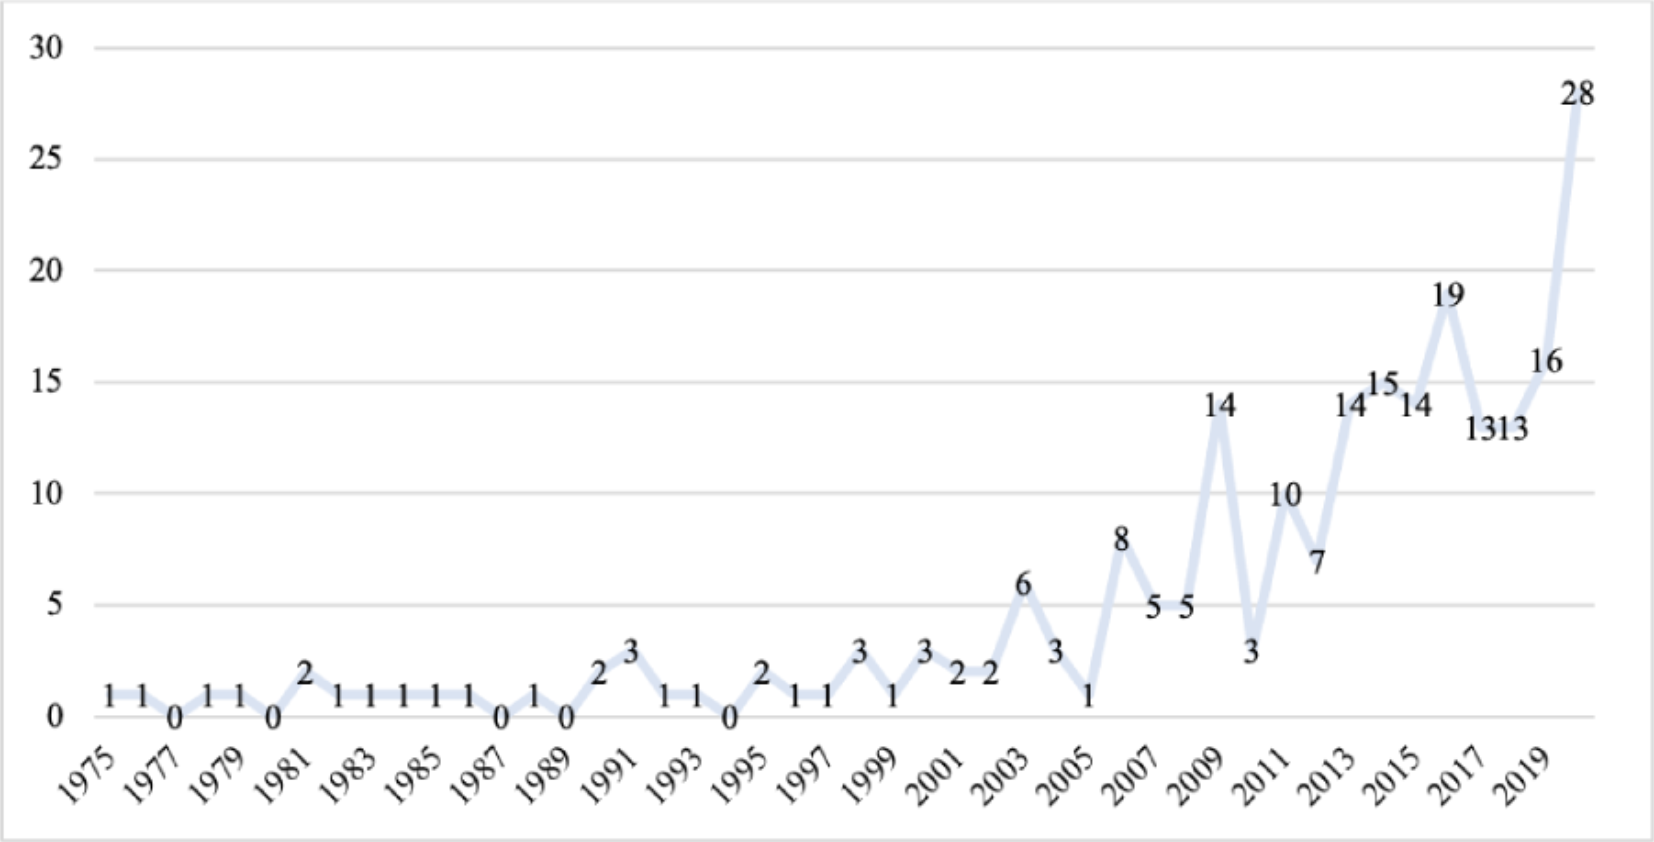 Evolution of published articles 1975-2020